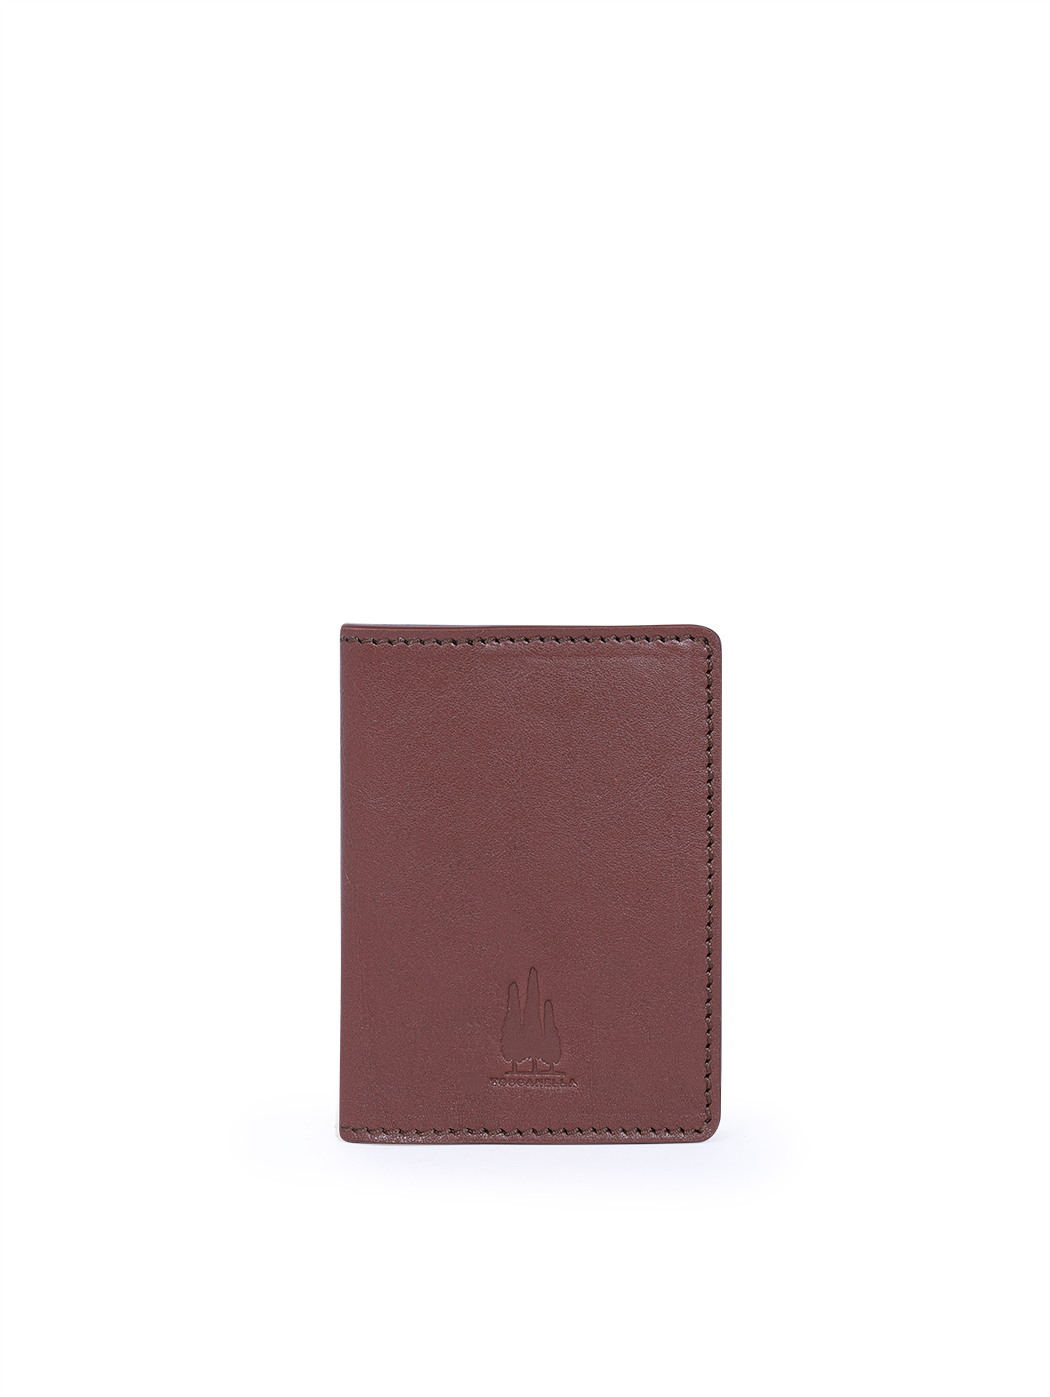 Business Card Holder in Leather Dark brown